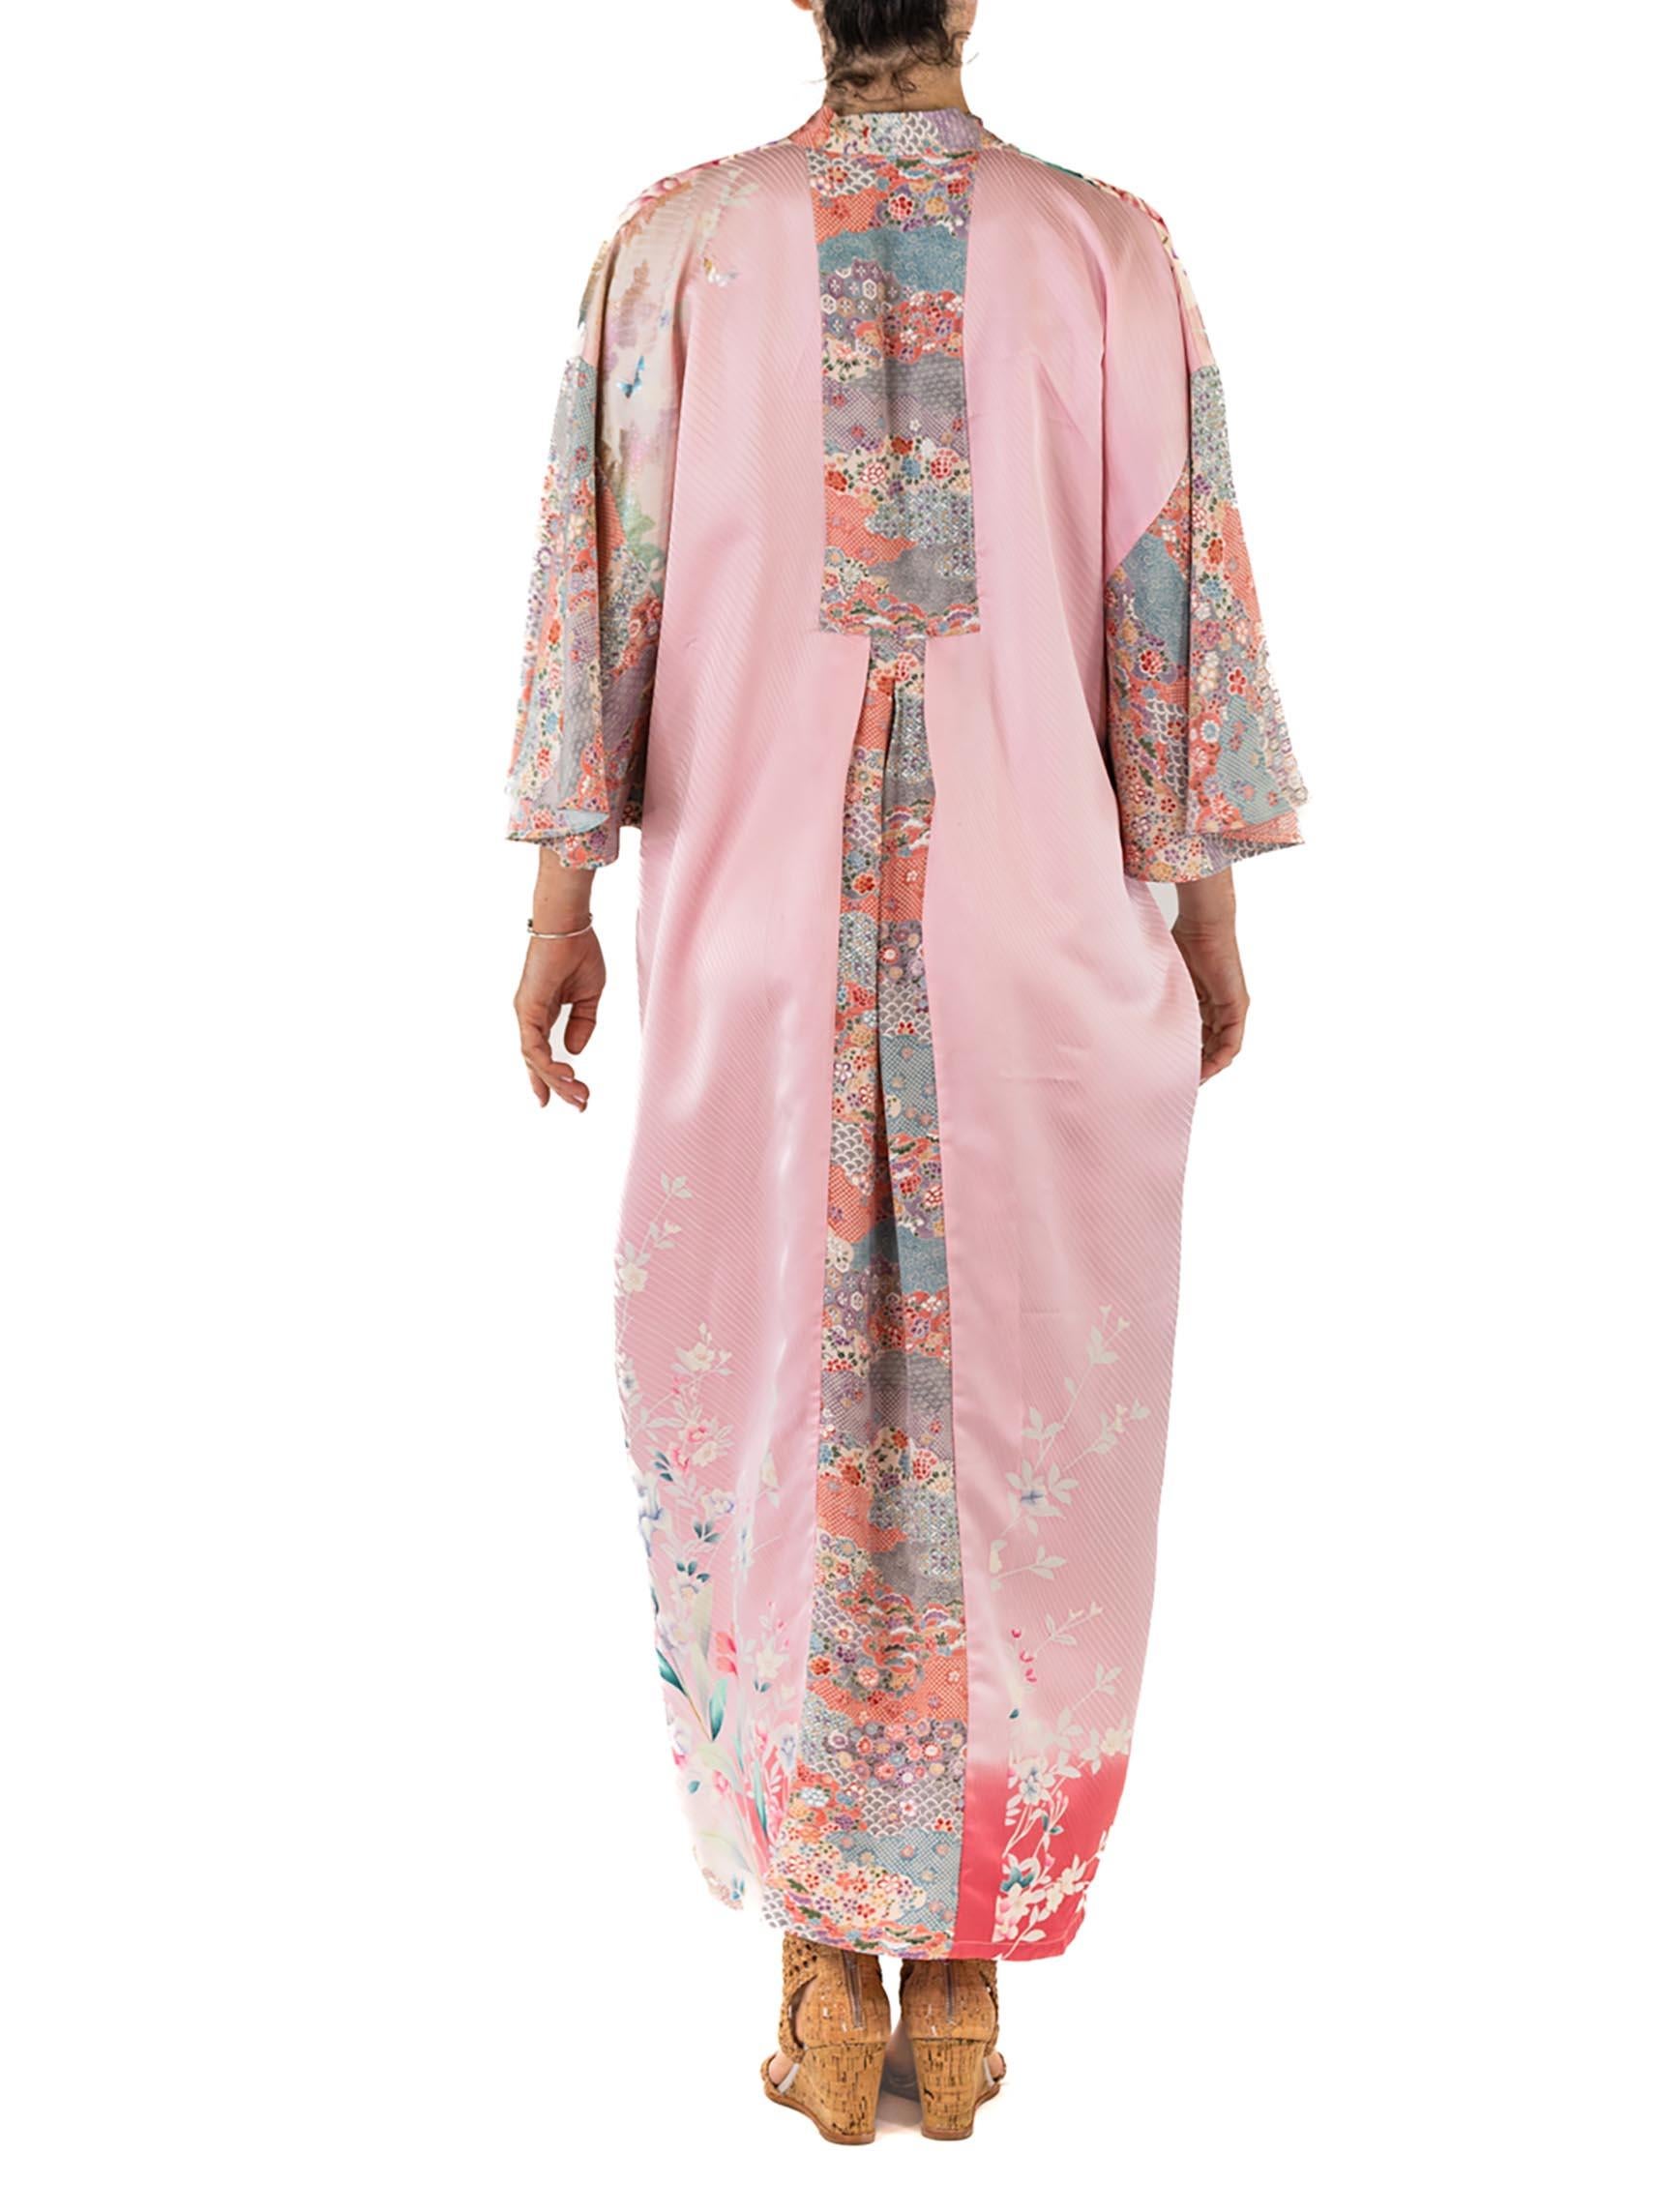 MORPHEW COLLECTION Mixed Pastels Floral Print Japanese Kimono Silk Pleate Kaftan For Sale 3